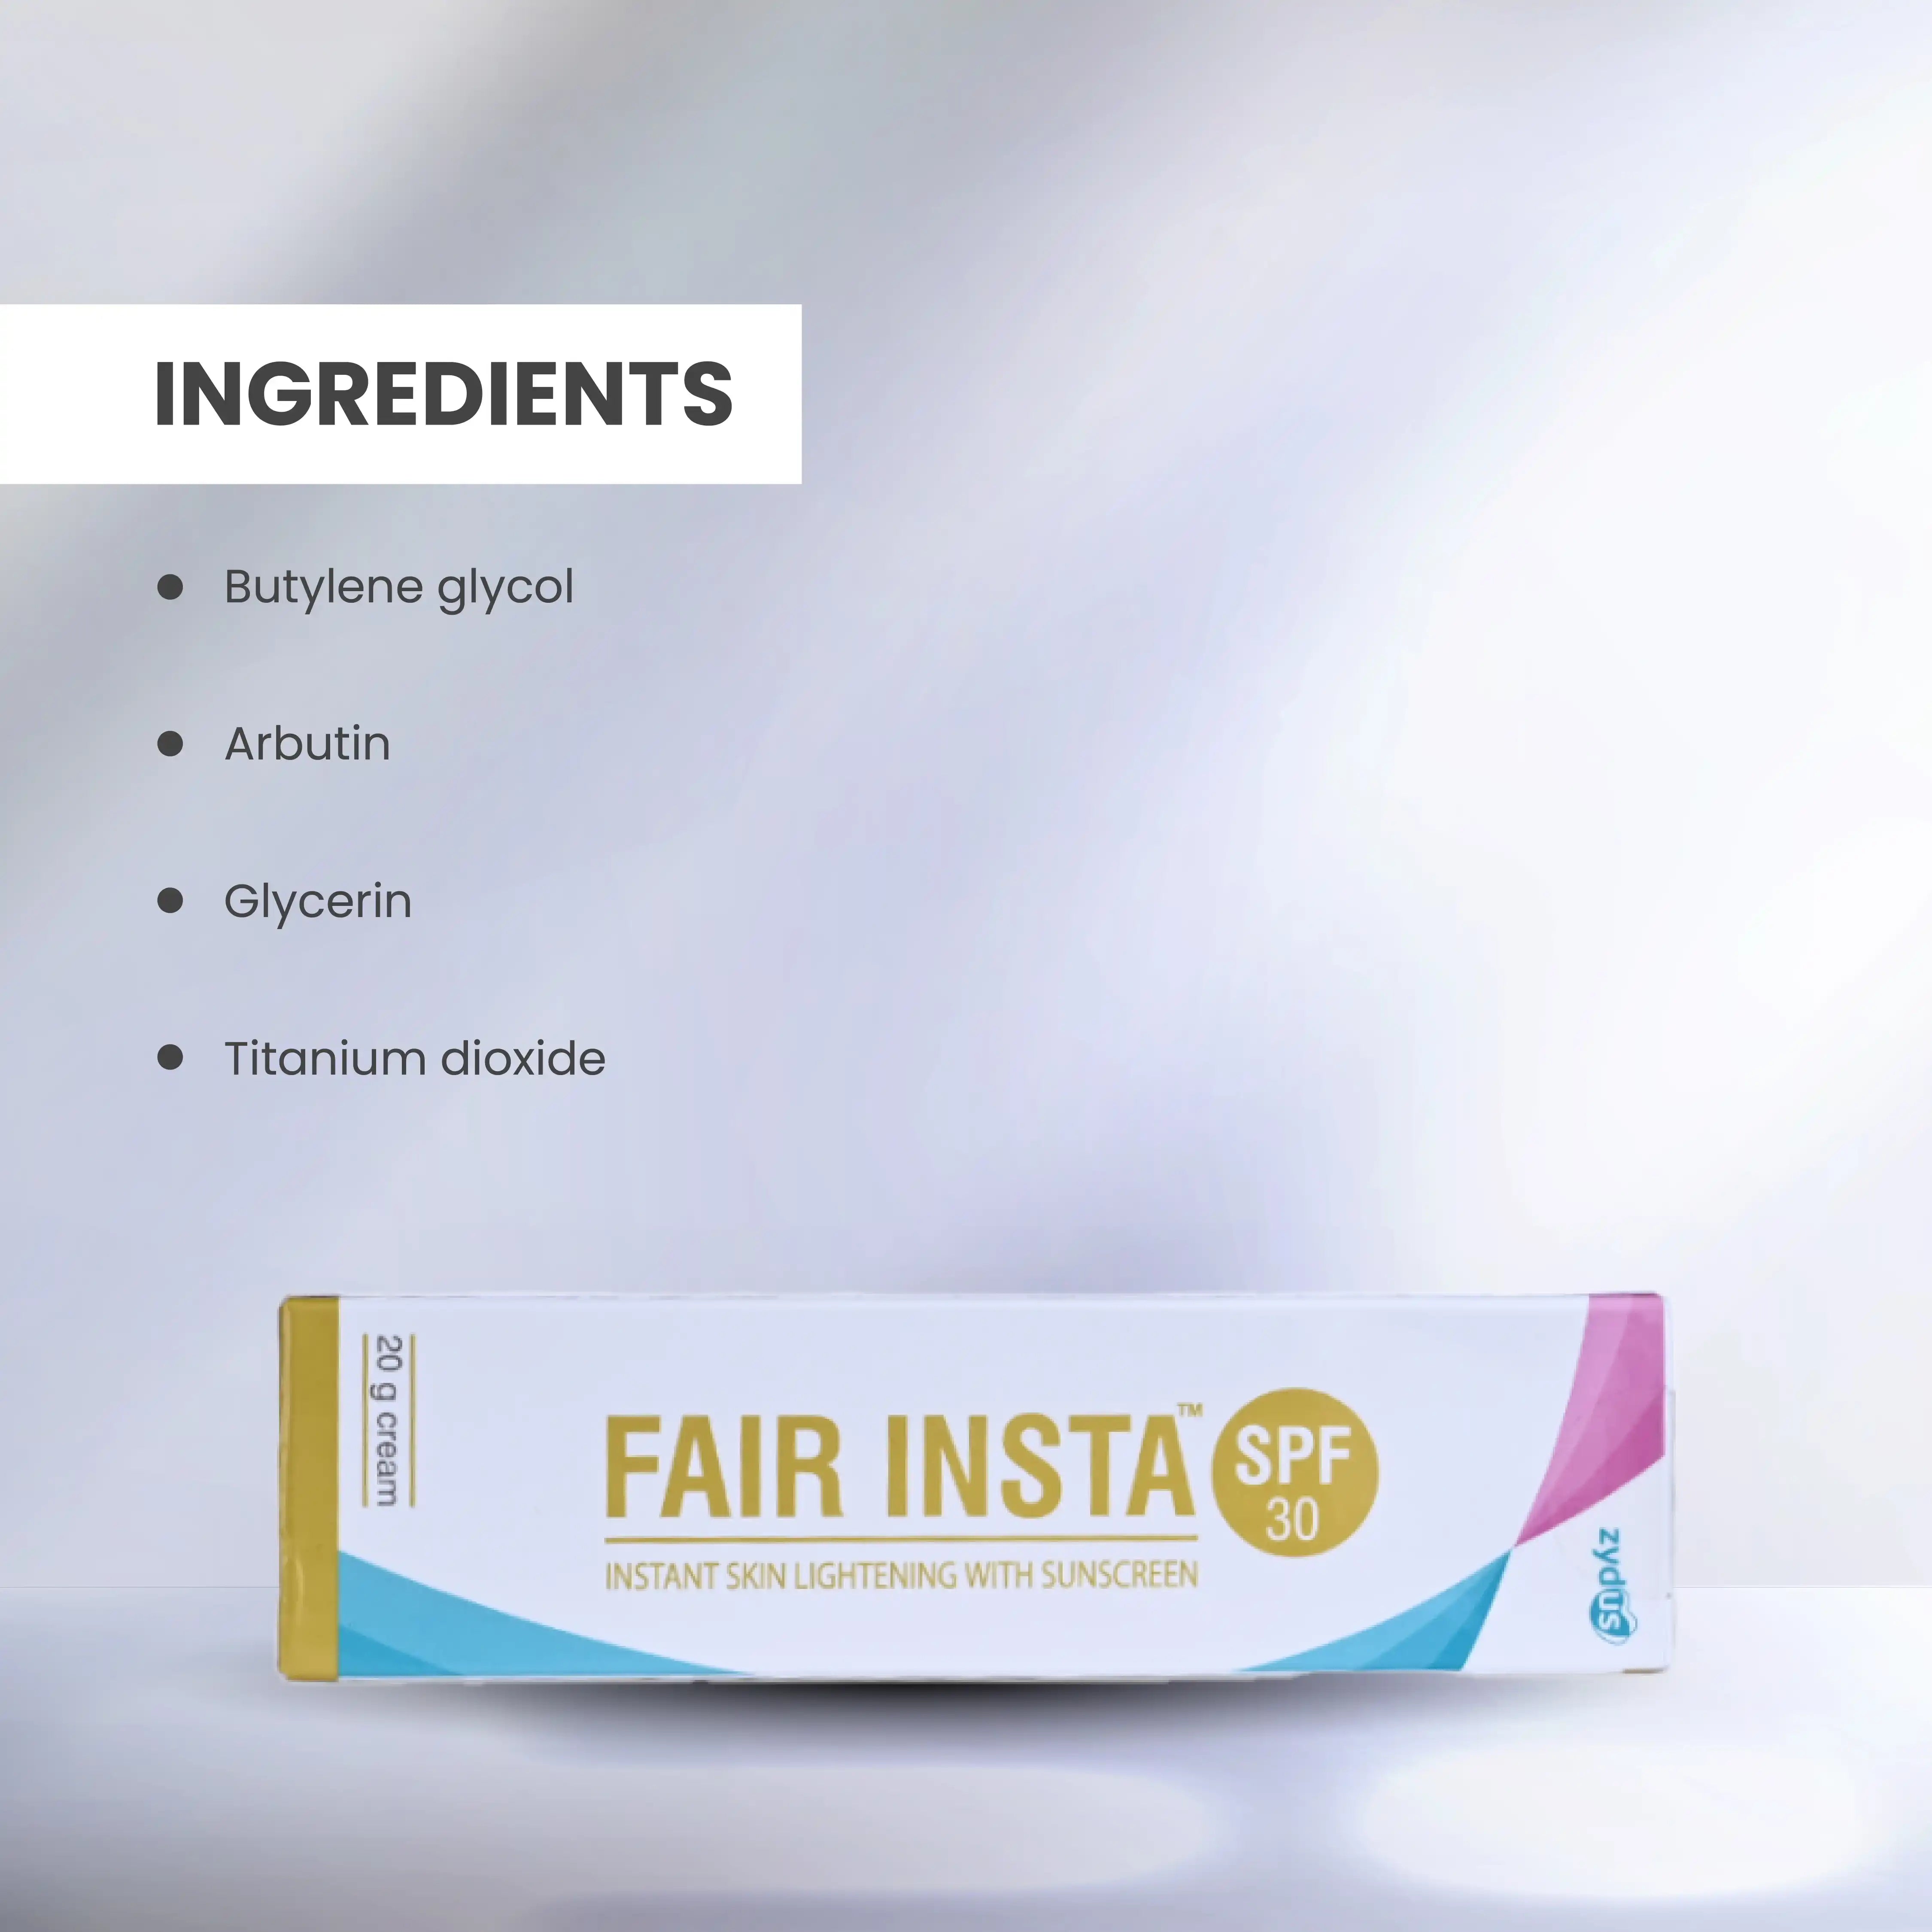 Fair Insta SPF 30 Instant Skin Lightening with Sunscreen